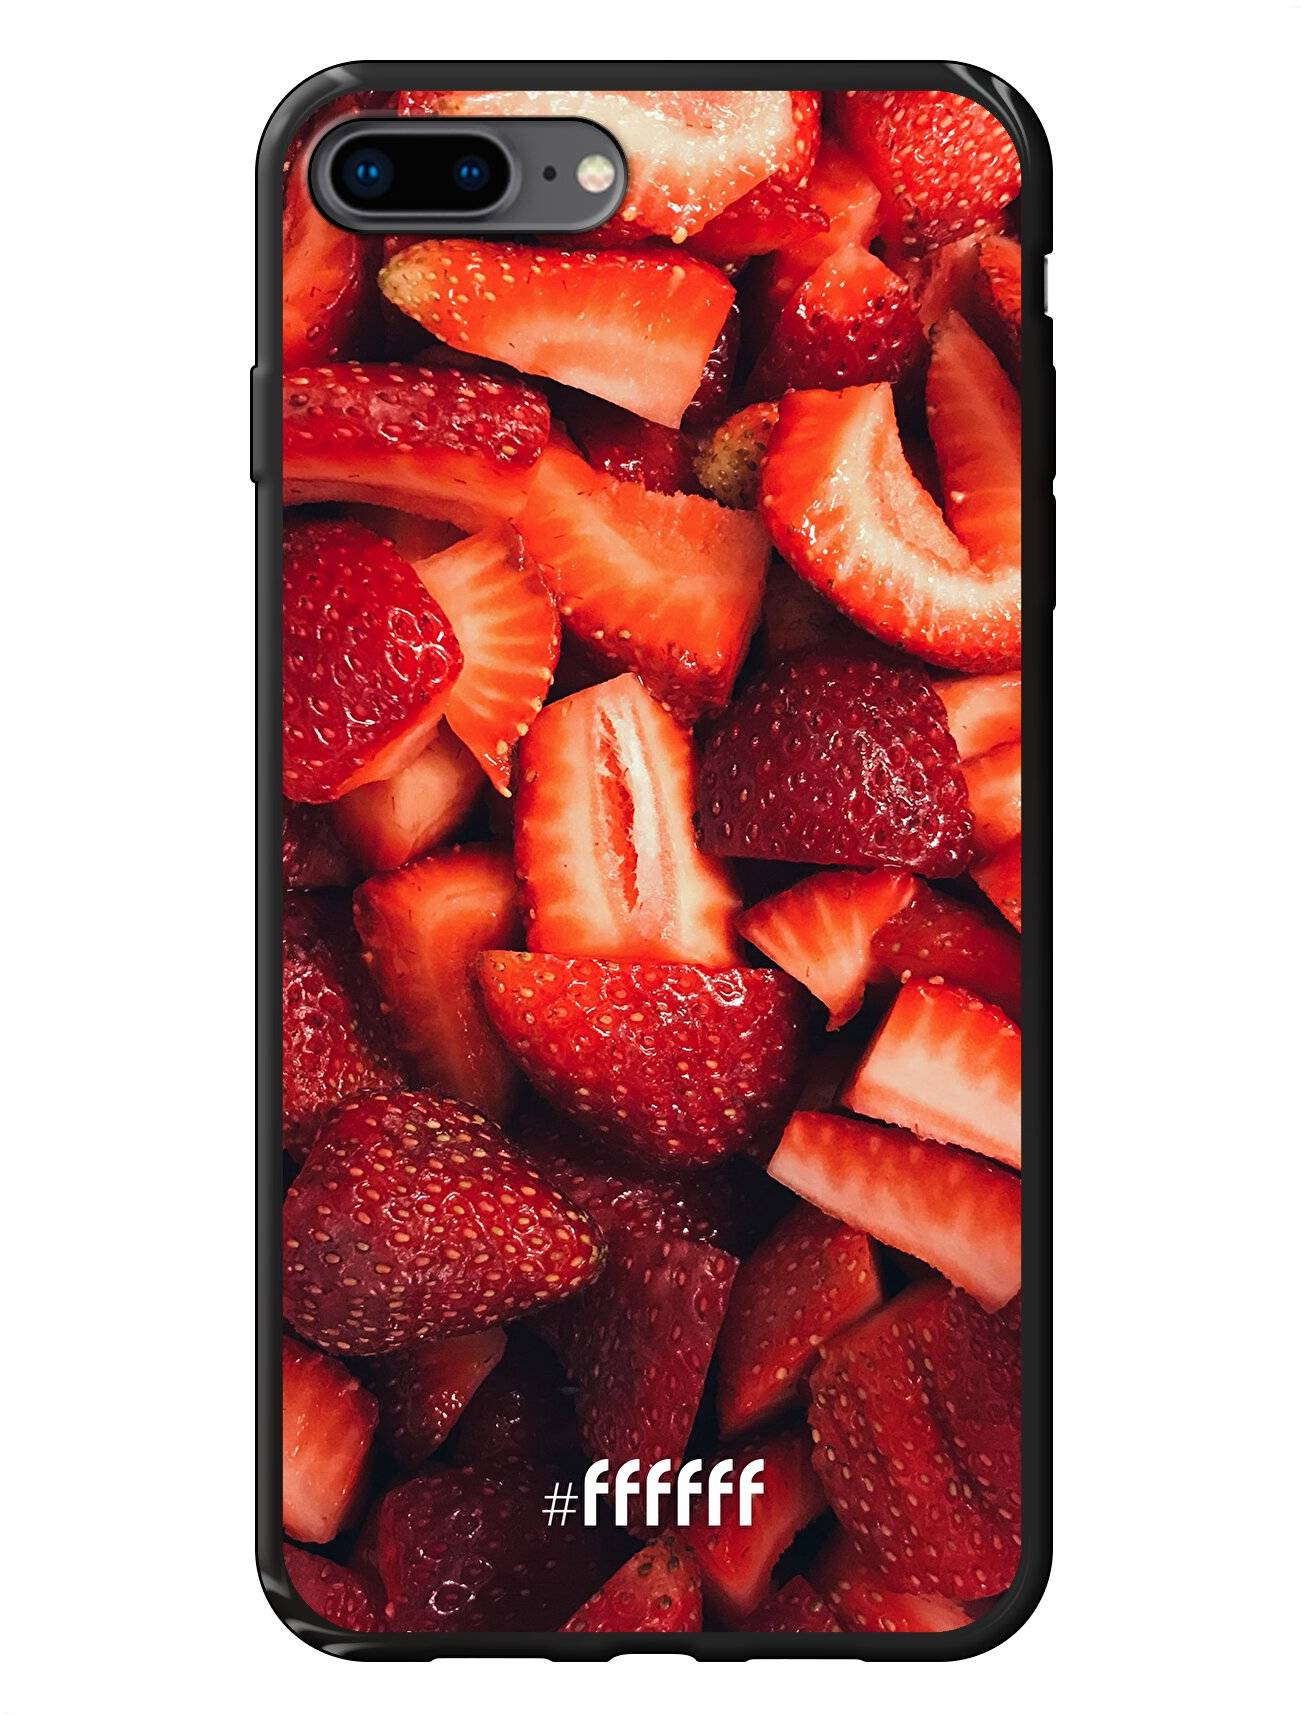 Strawberry Fields iPhone 7 Plus